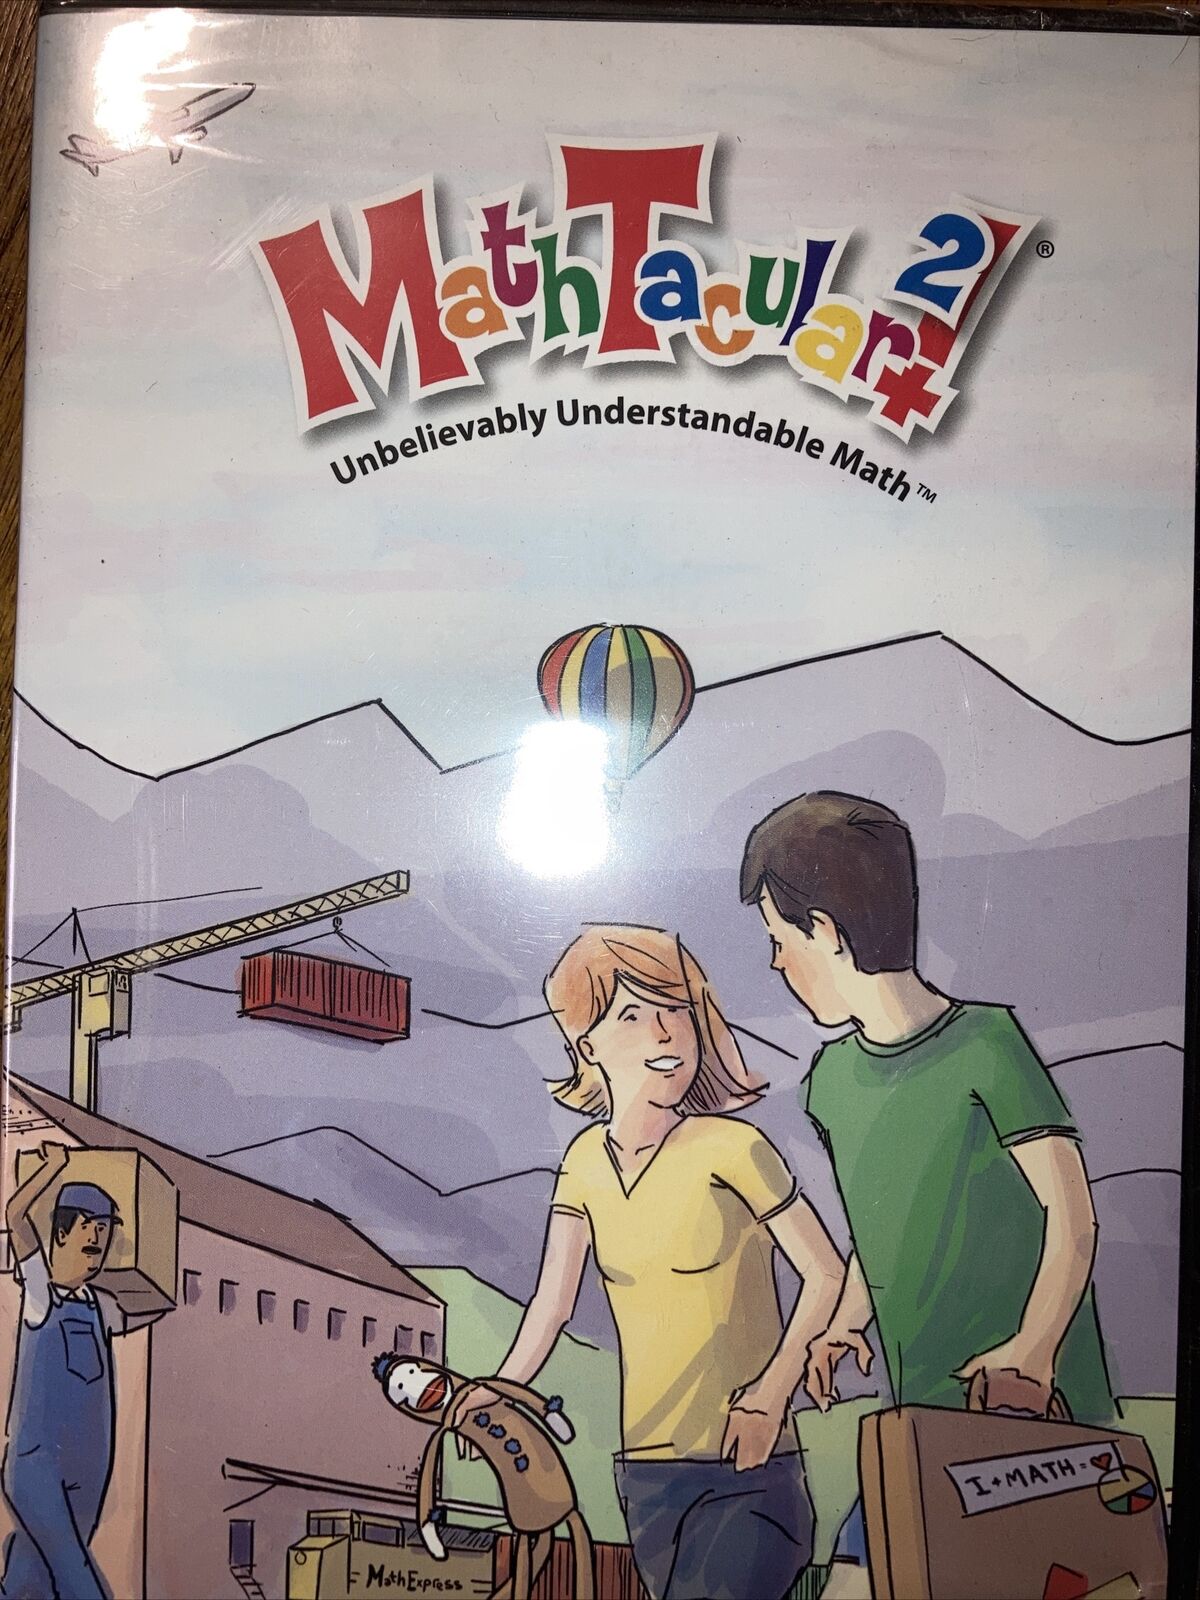 Mathtacular+2 Unbelievable Understandable Math DVD